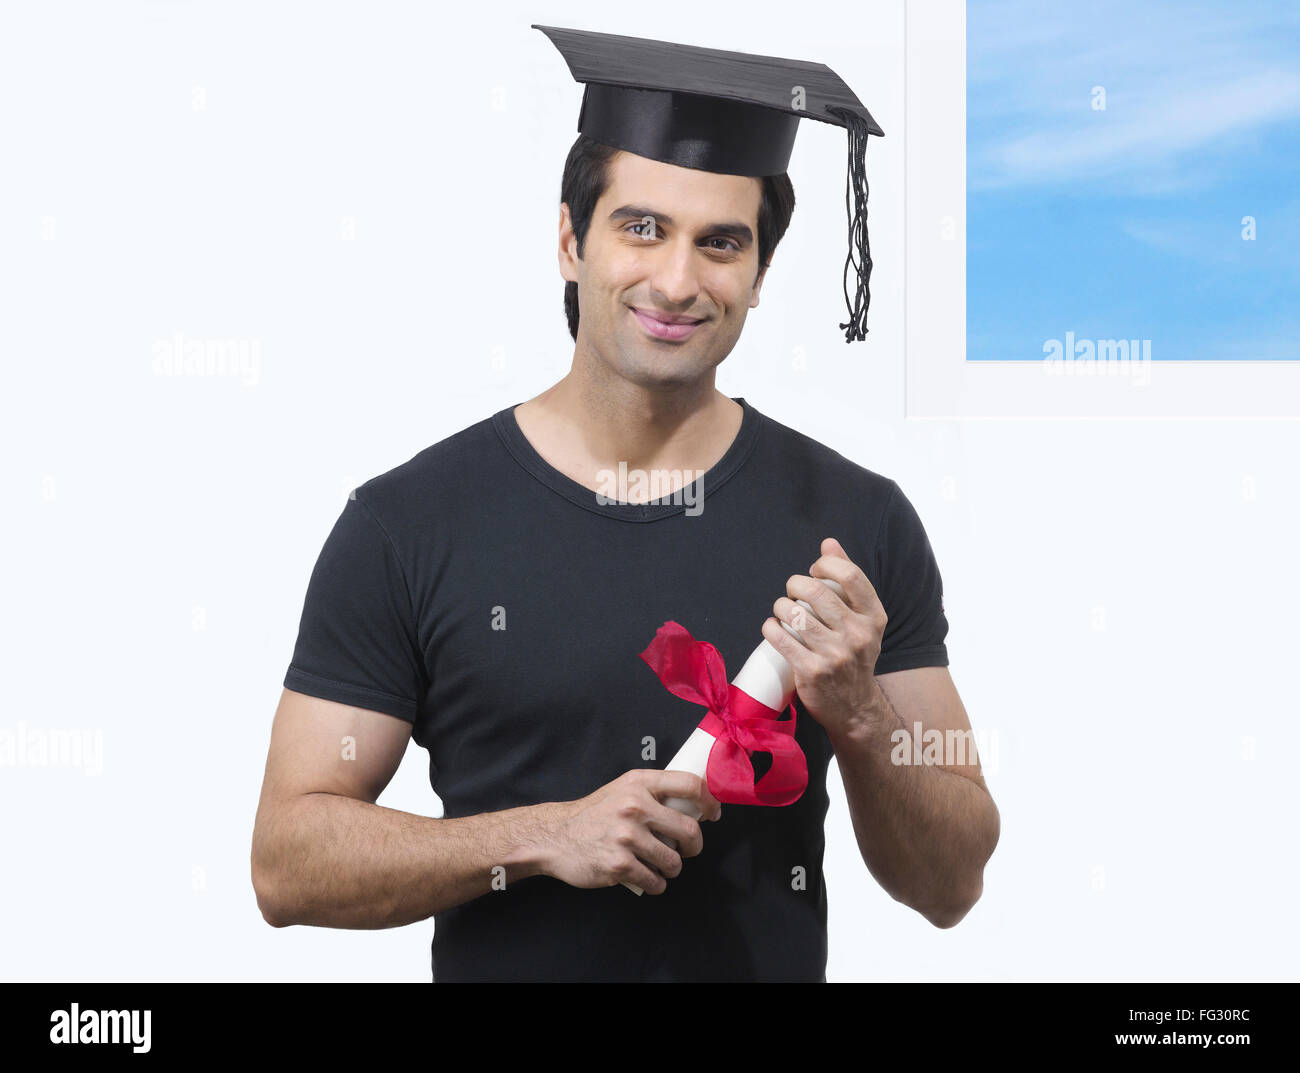 Man holding degree certificate ; MR#779L Stock Photo